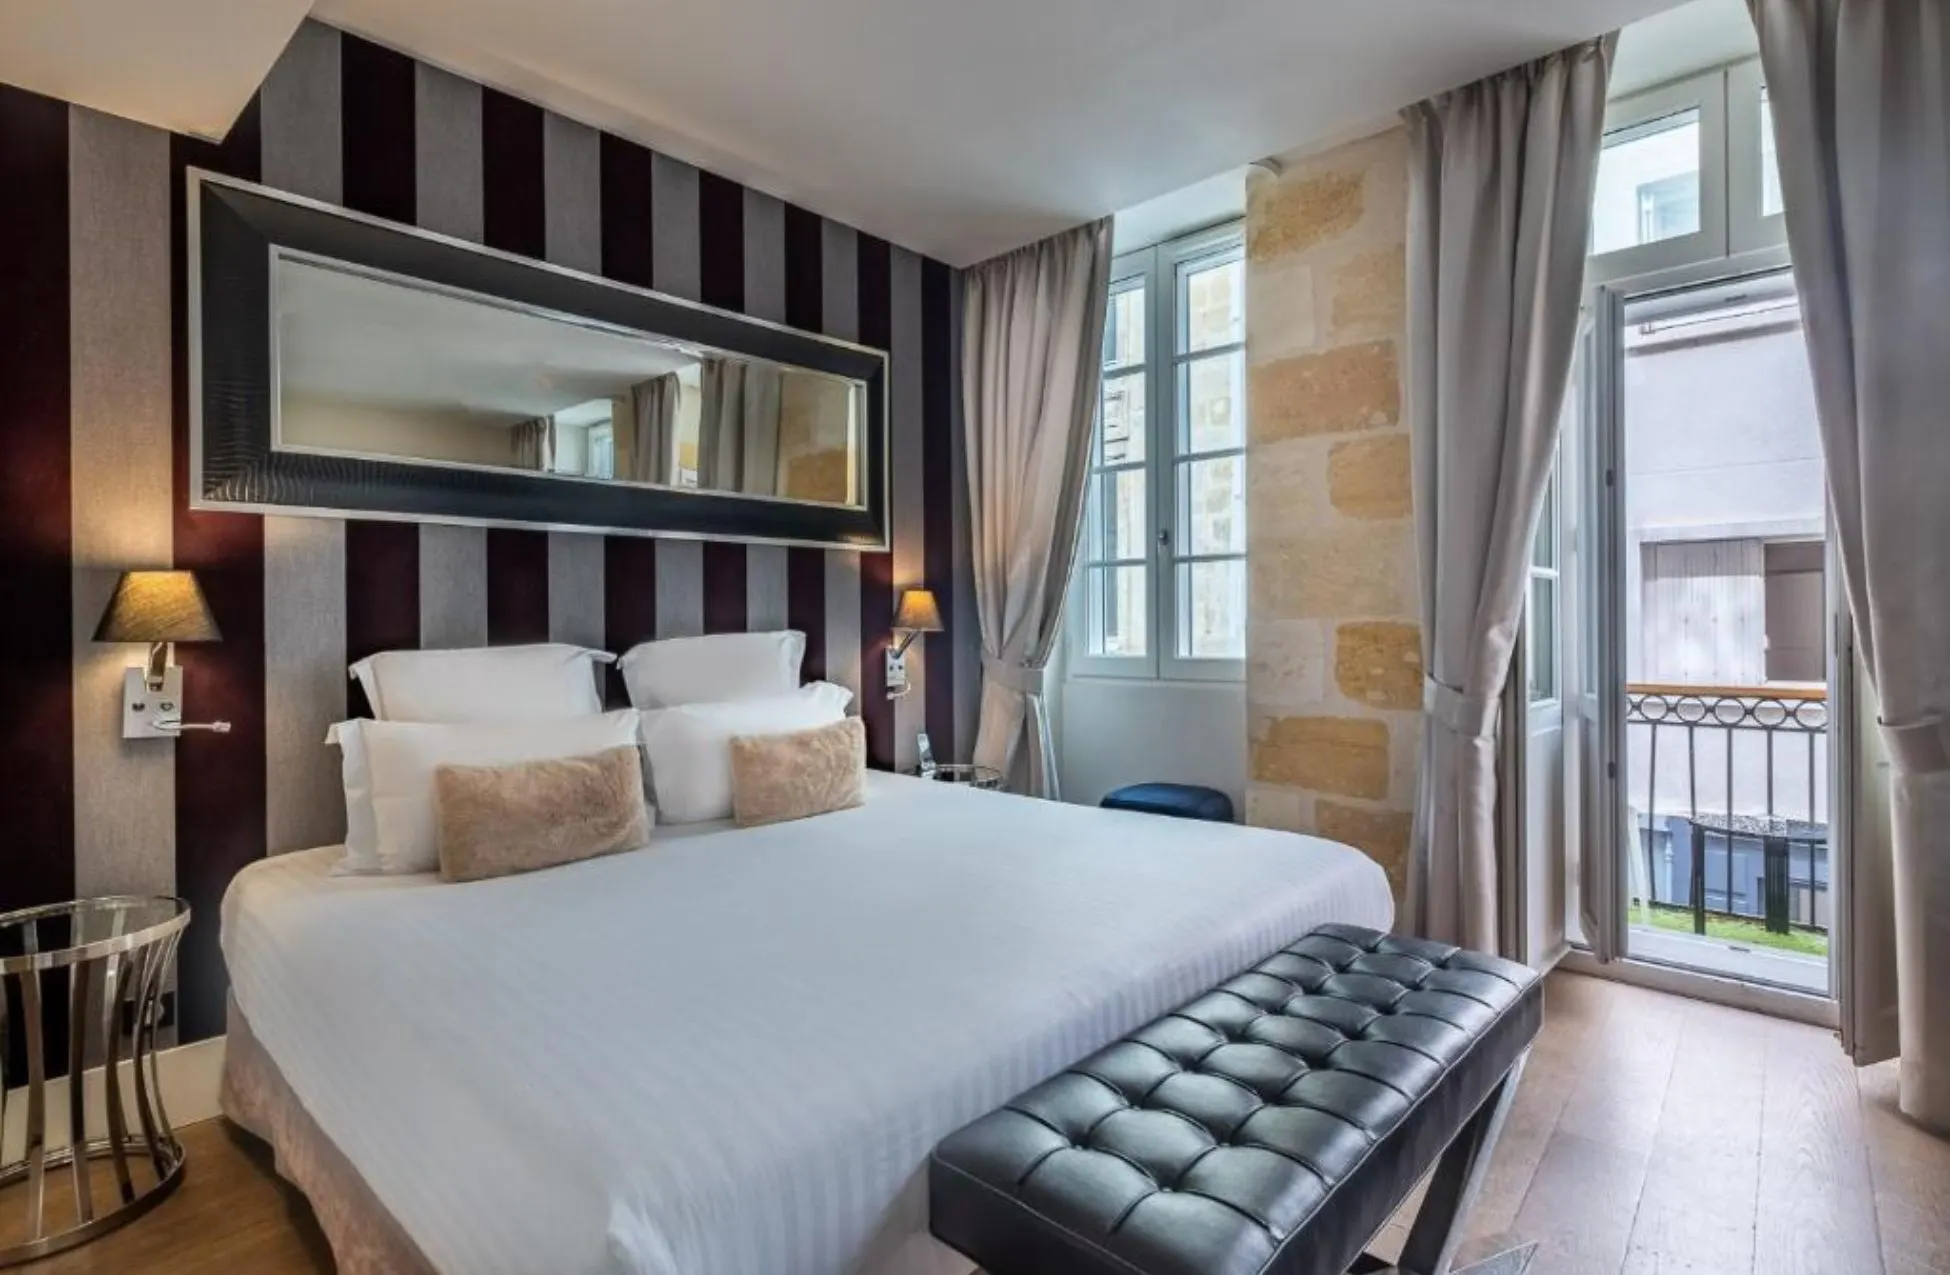 Le Boutique Hotel & Spa - Best Hotels In Bordeaux